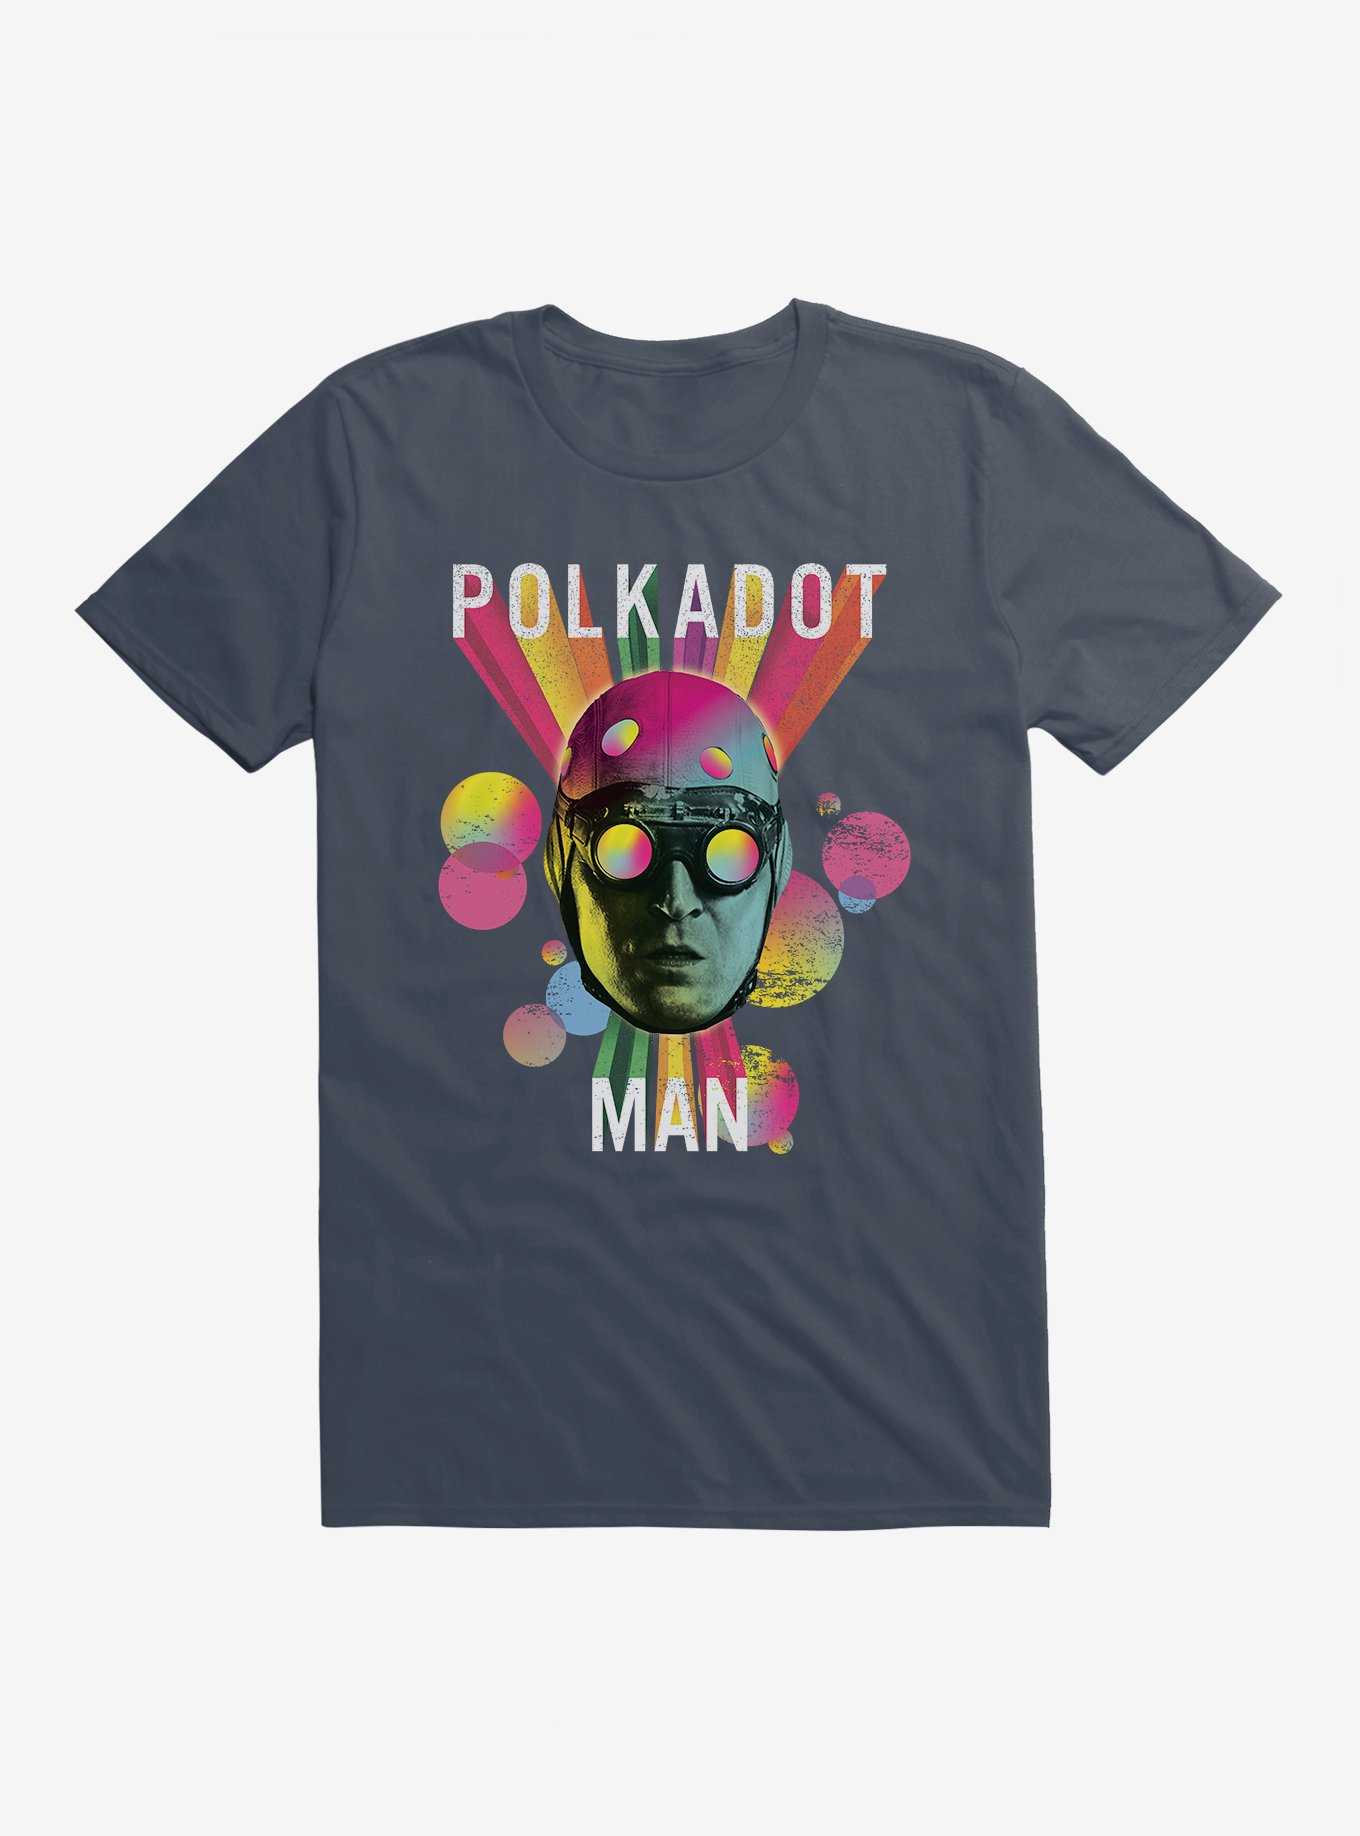 DC The Suicide Squad Polka-Dot Man Up Close T-Shirt, , hi-res